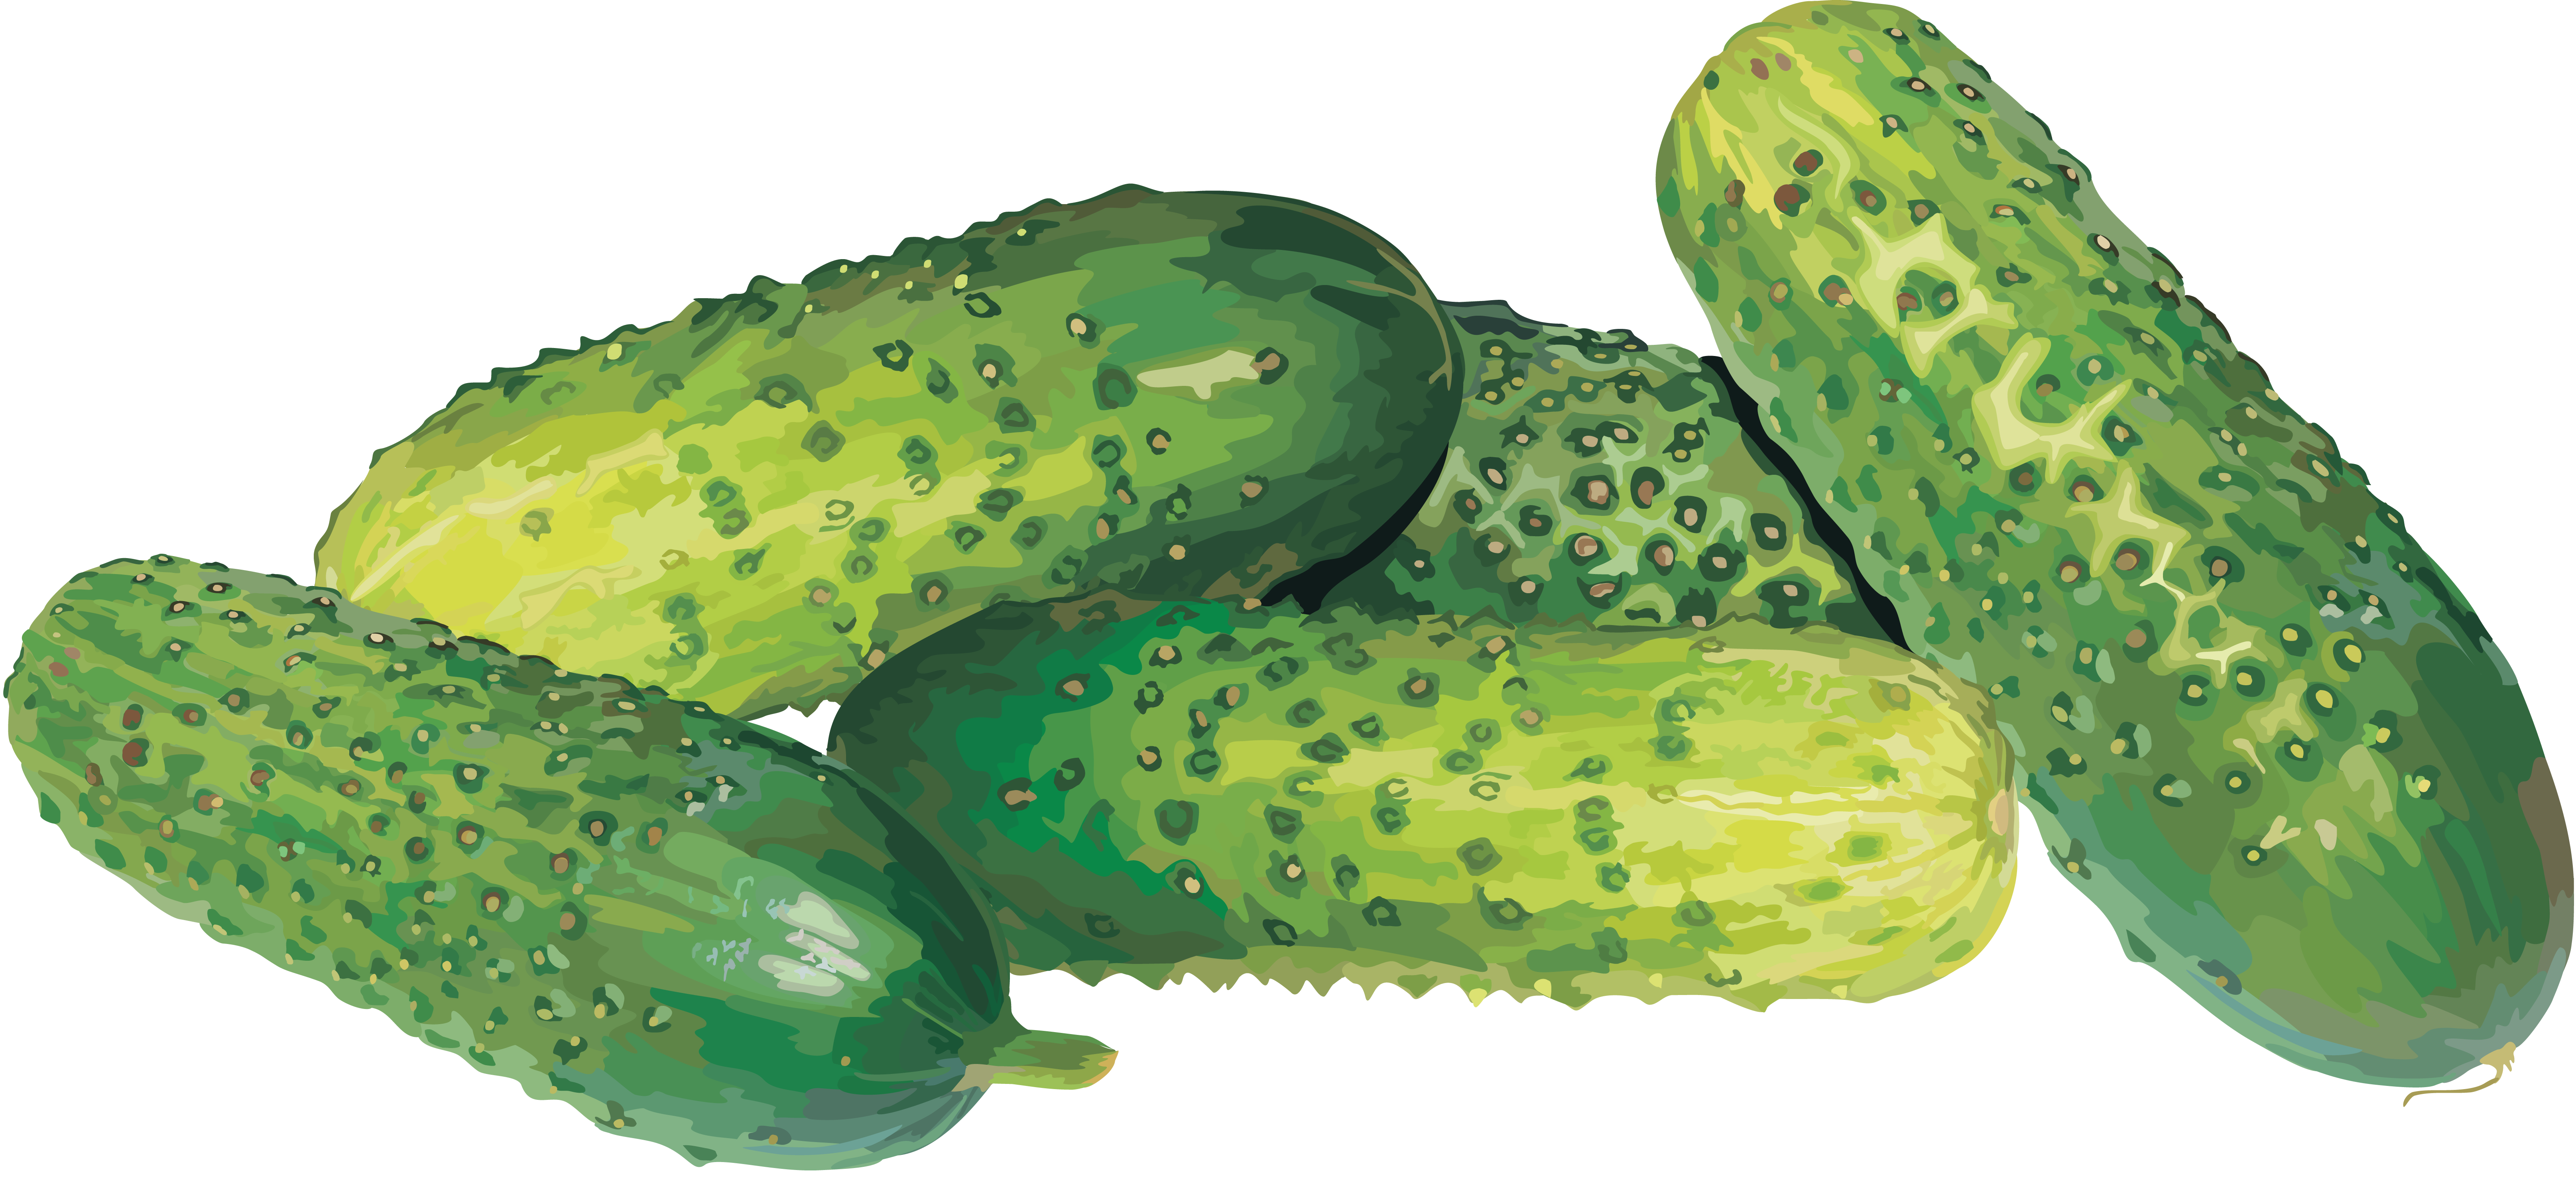 fresh cucumbers PNG